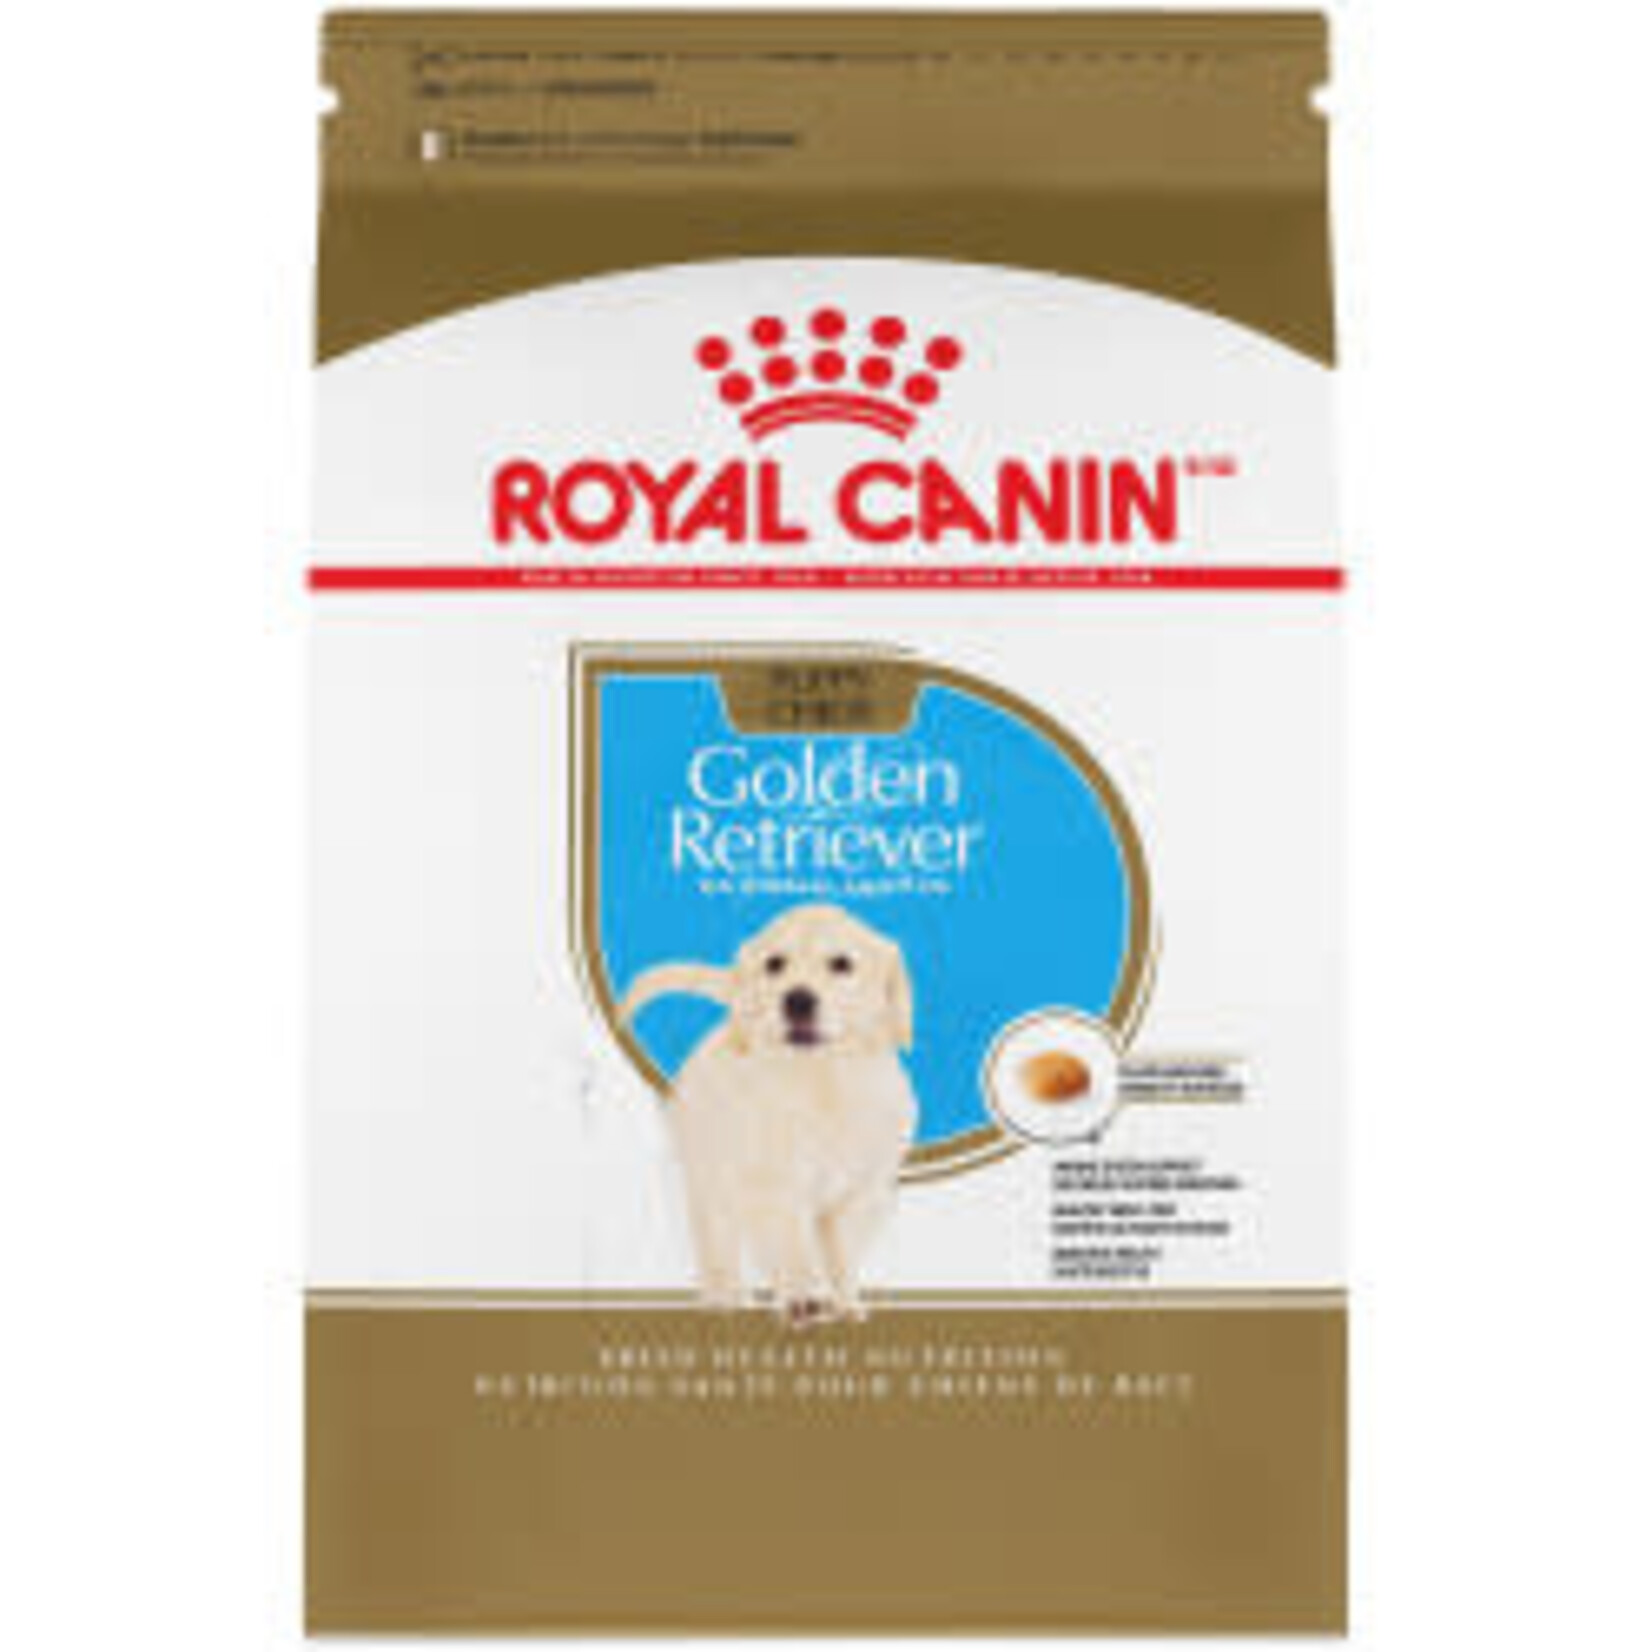 Royal Canin Royal Canin Golden Retriever Chiot 30lb/13.61kg